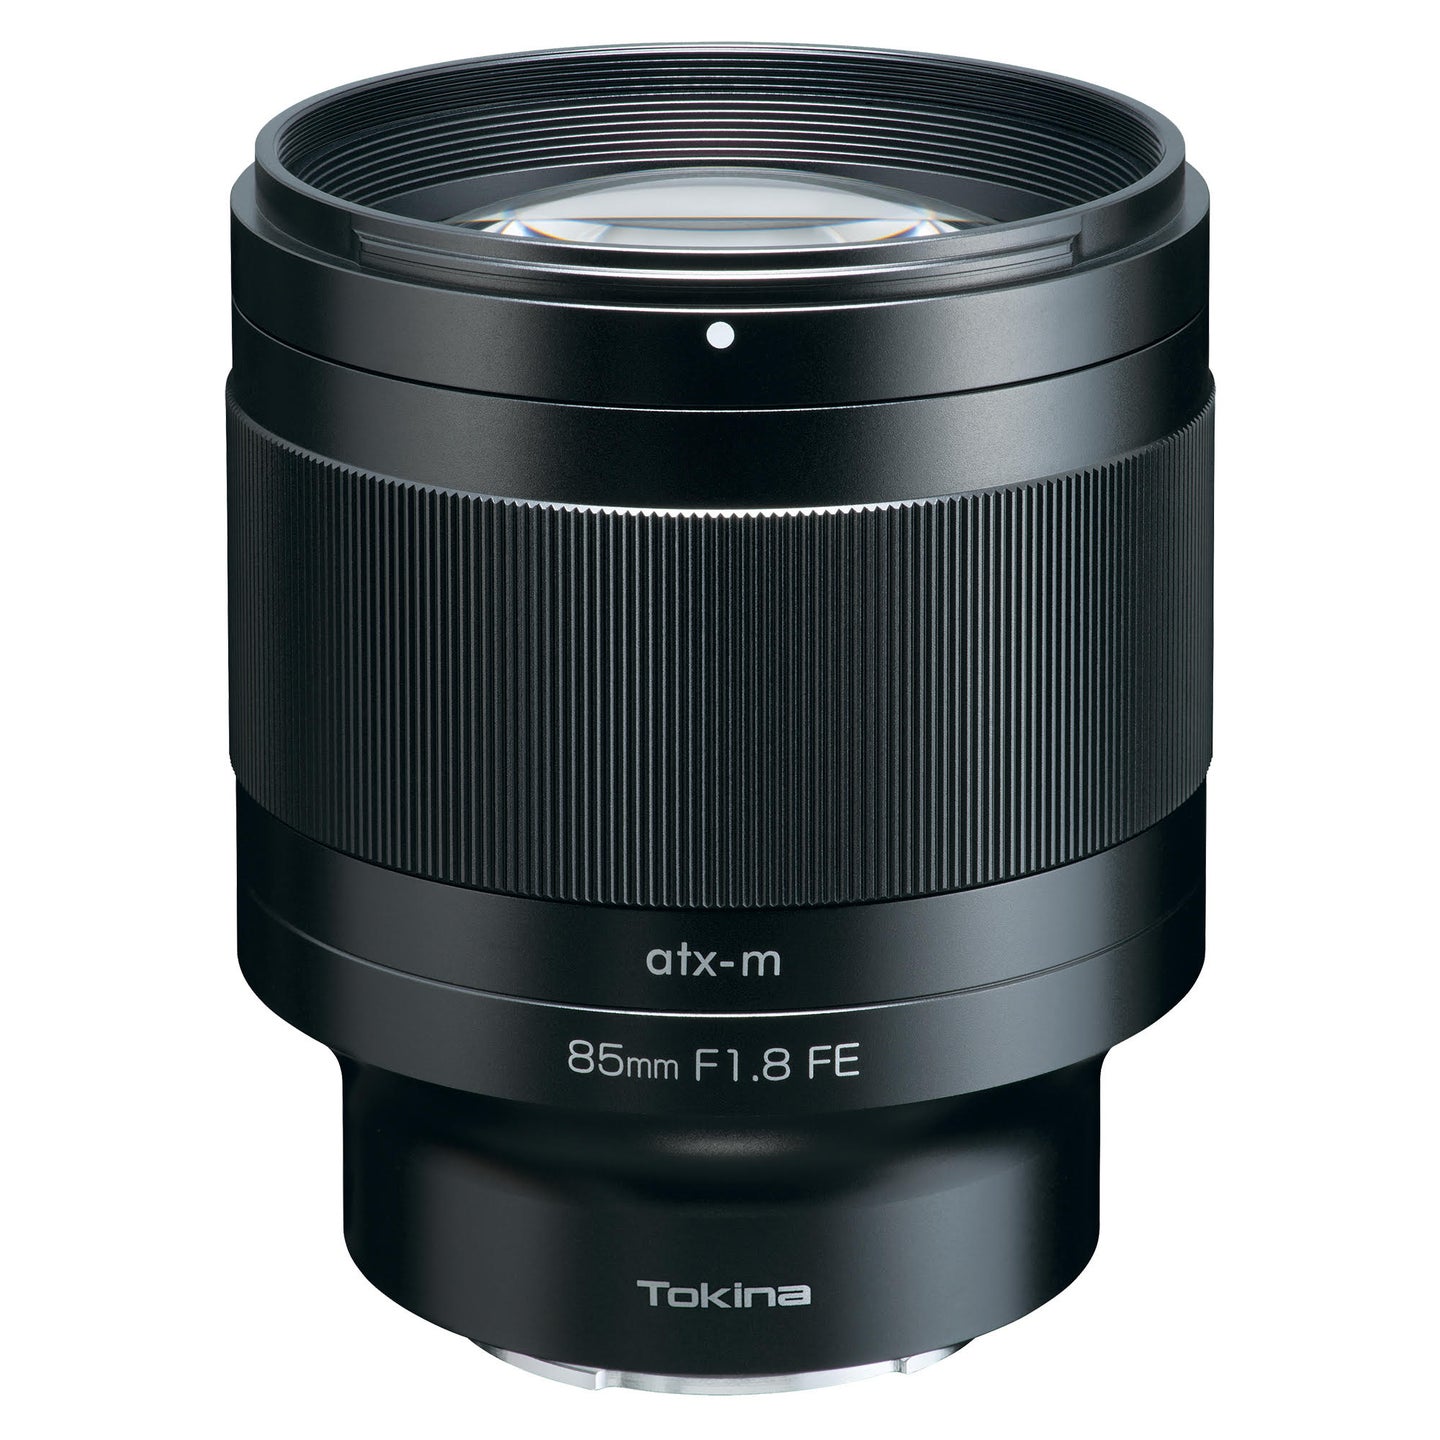 Tokina ATX-M 85mm f/1.8 lens